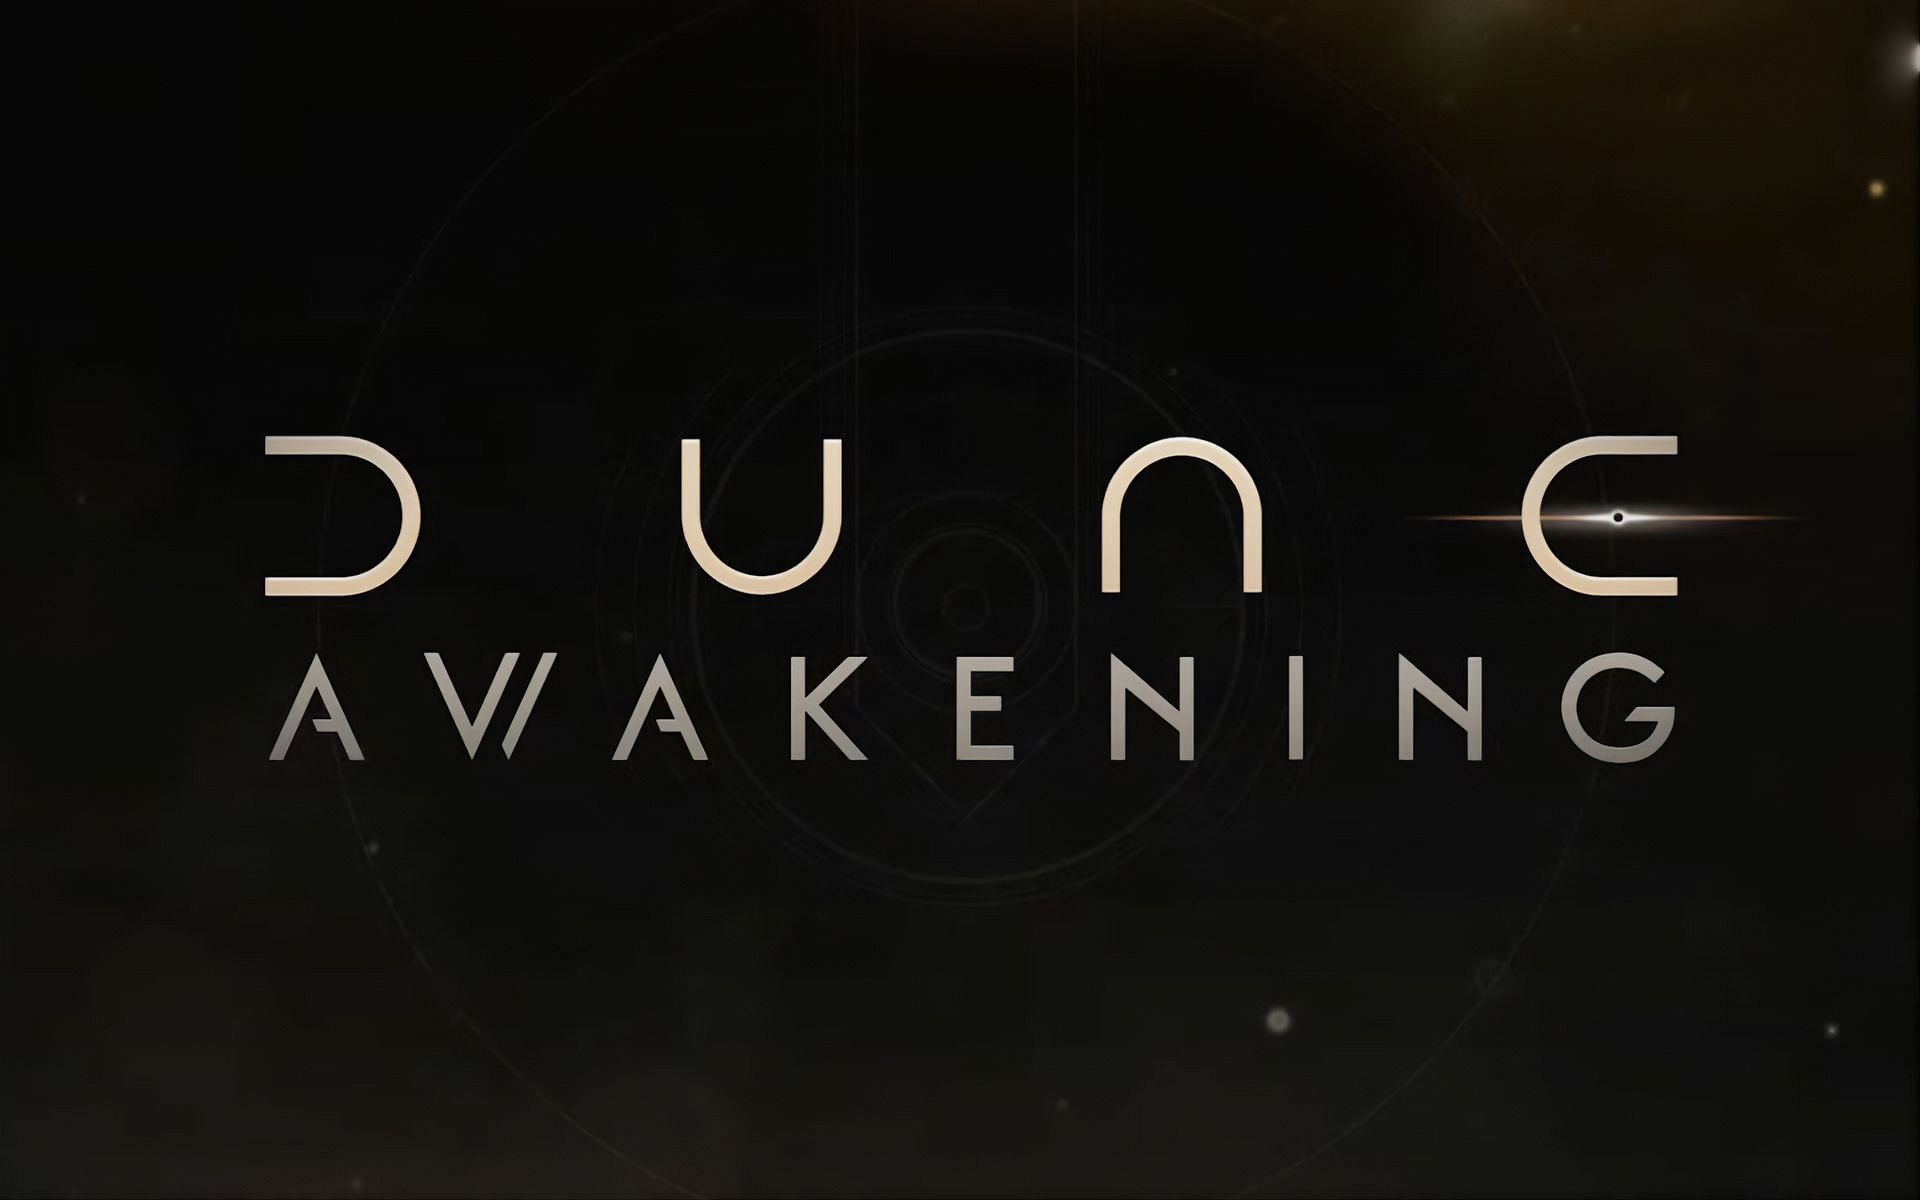 Dune: Awakening teased at Gamescom 2022 (Image via Gamescom)